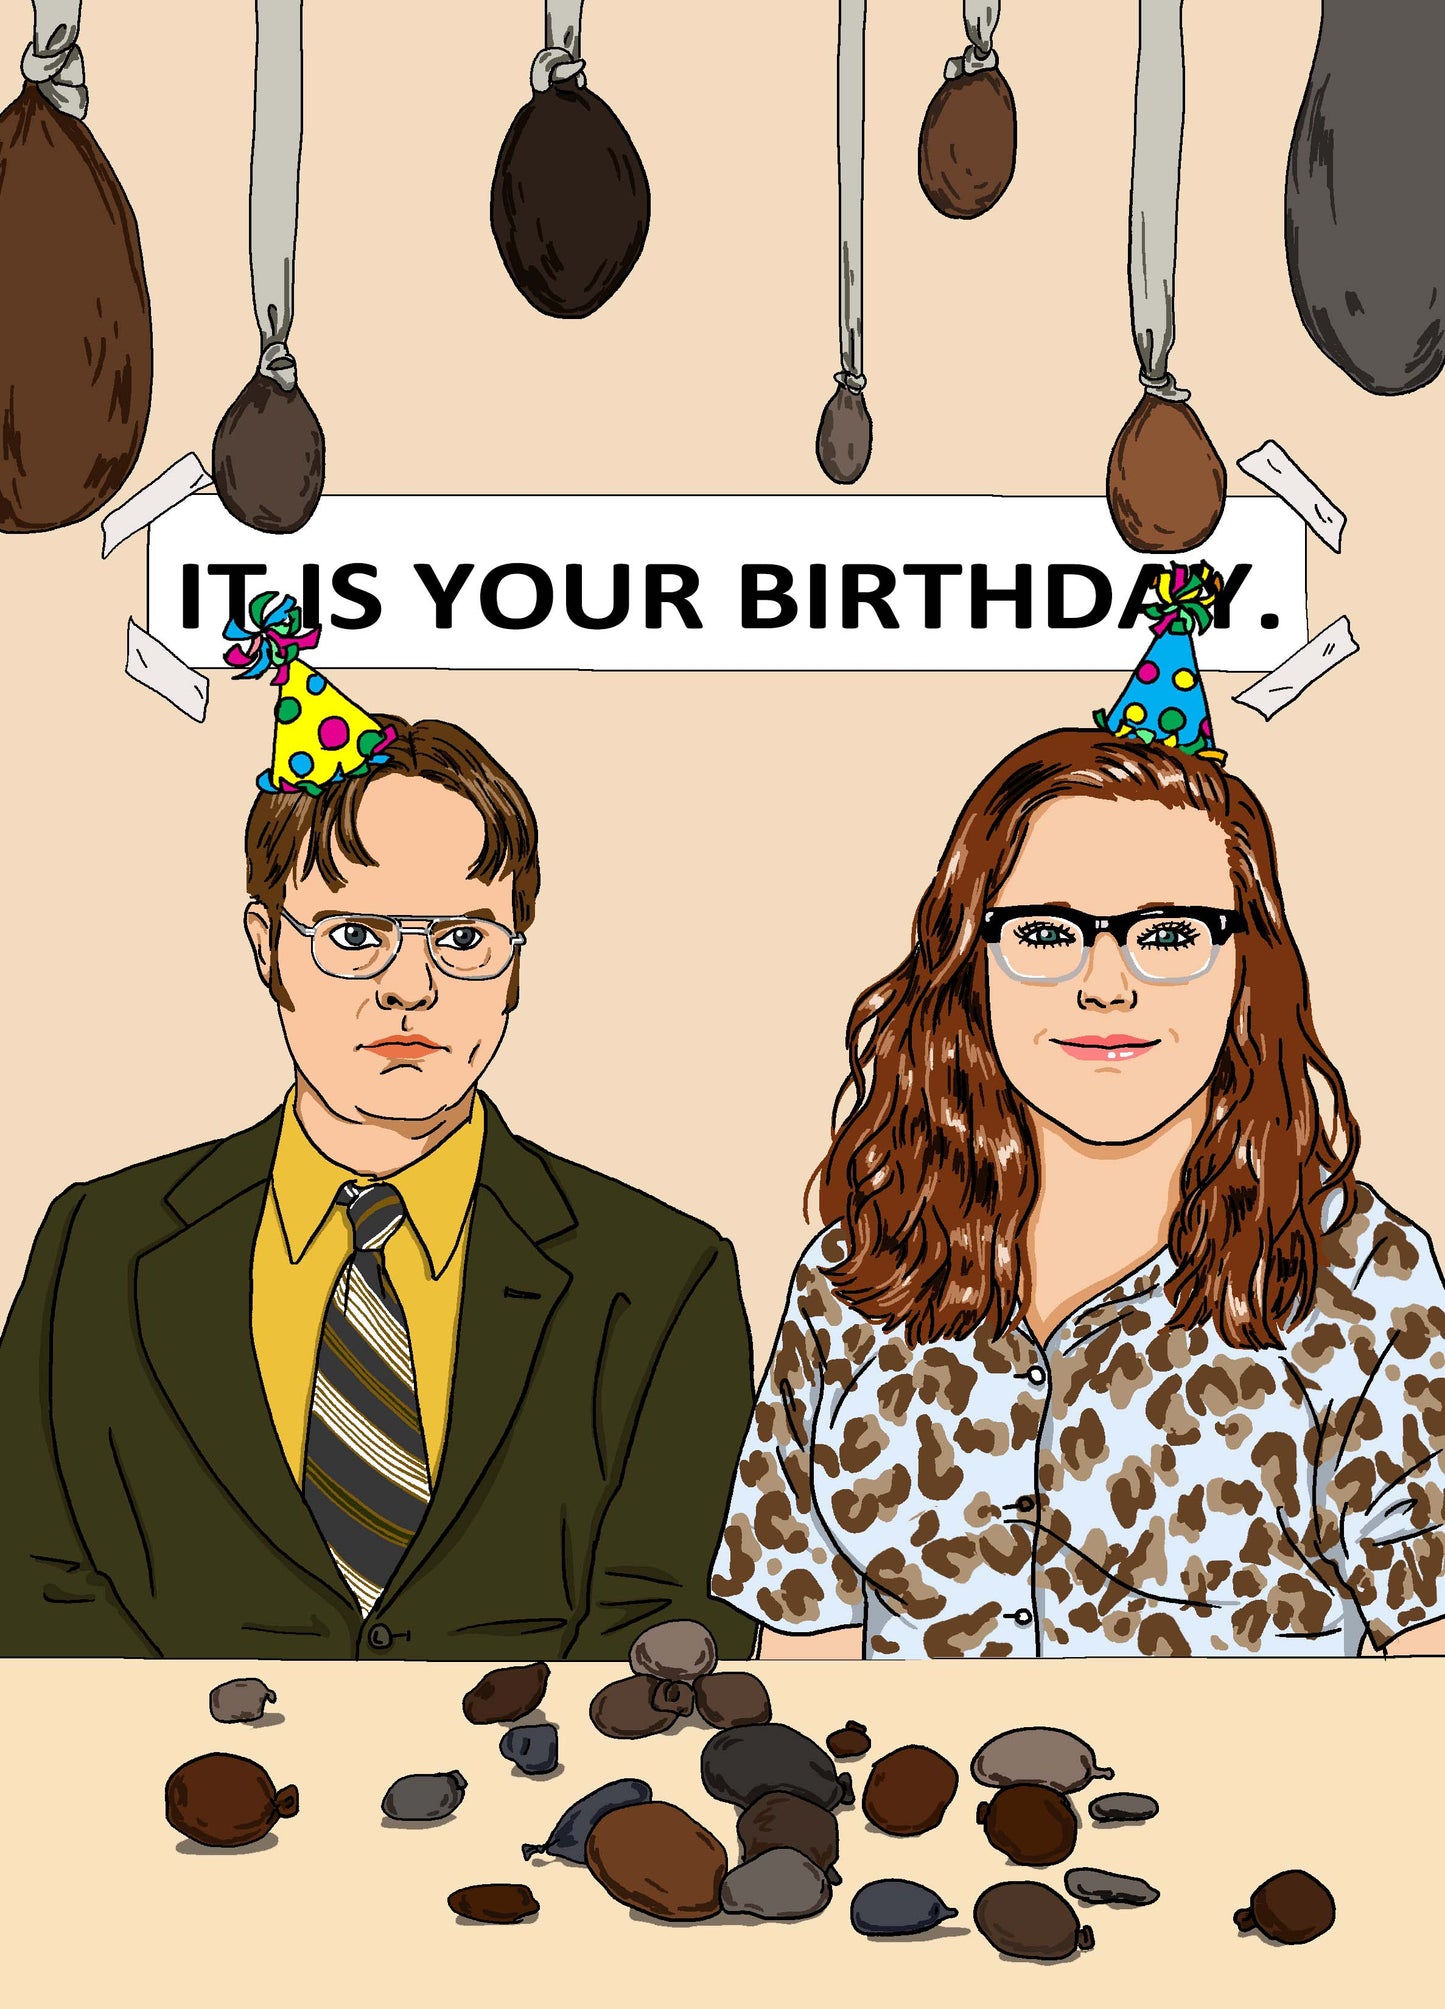 Custom The Office Birthday Card - Dwight Schrute